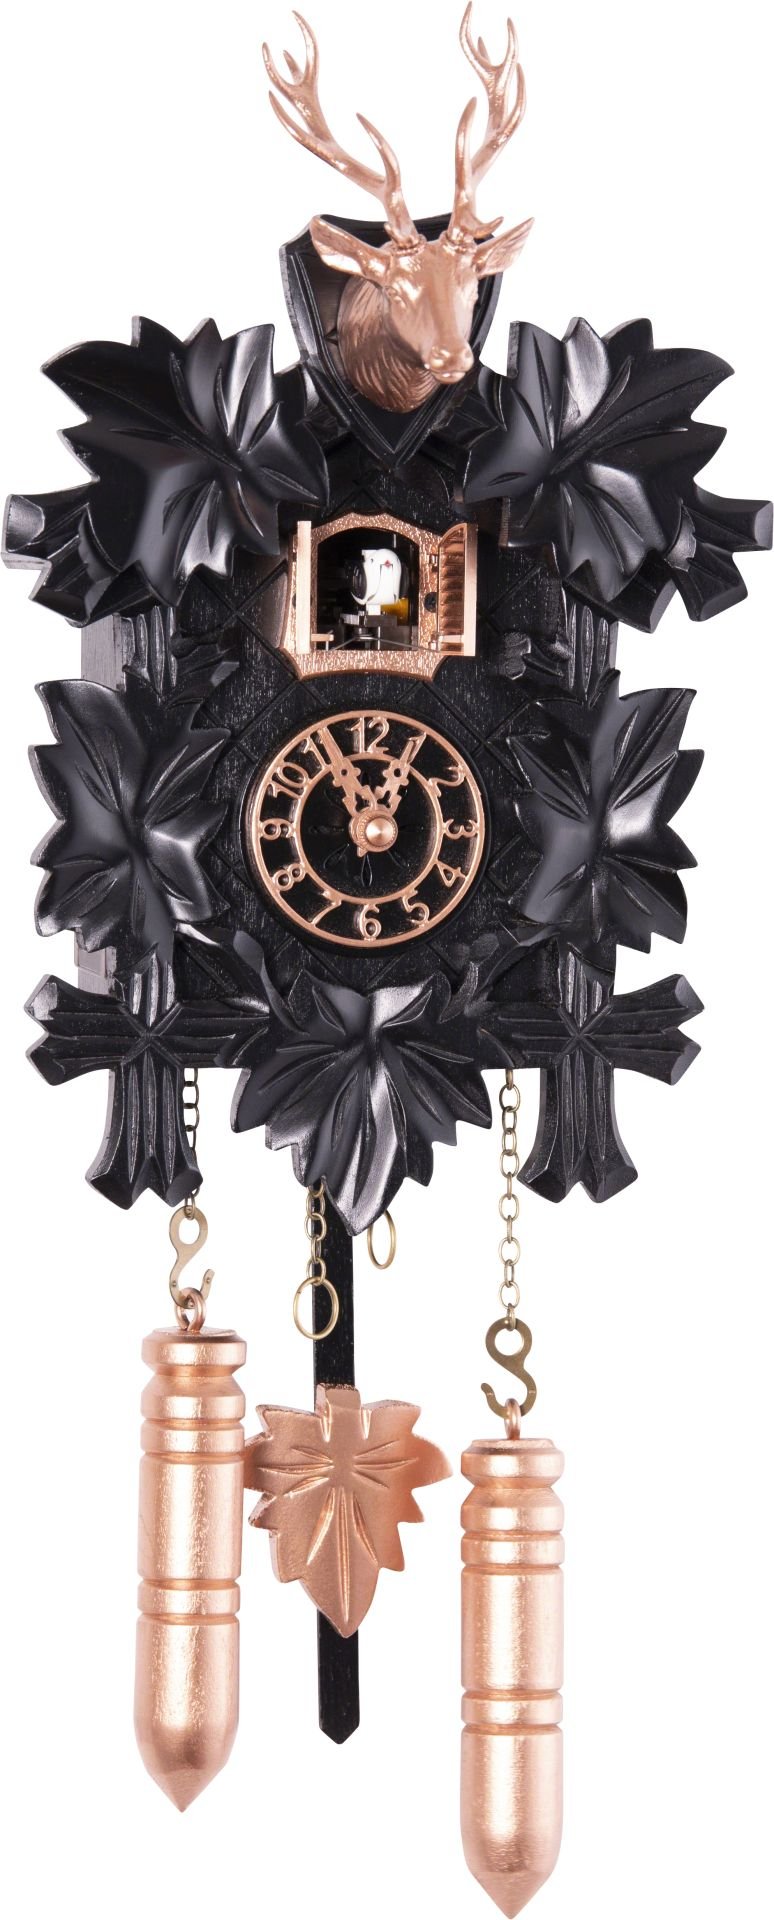 Cuckoo Clock Modern Art Style Quartz Movement 22cm by Trenkle Uhren